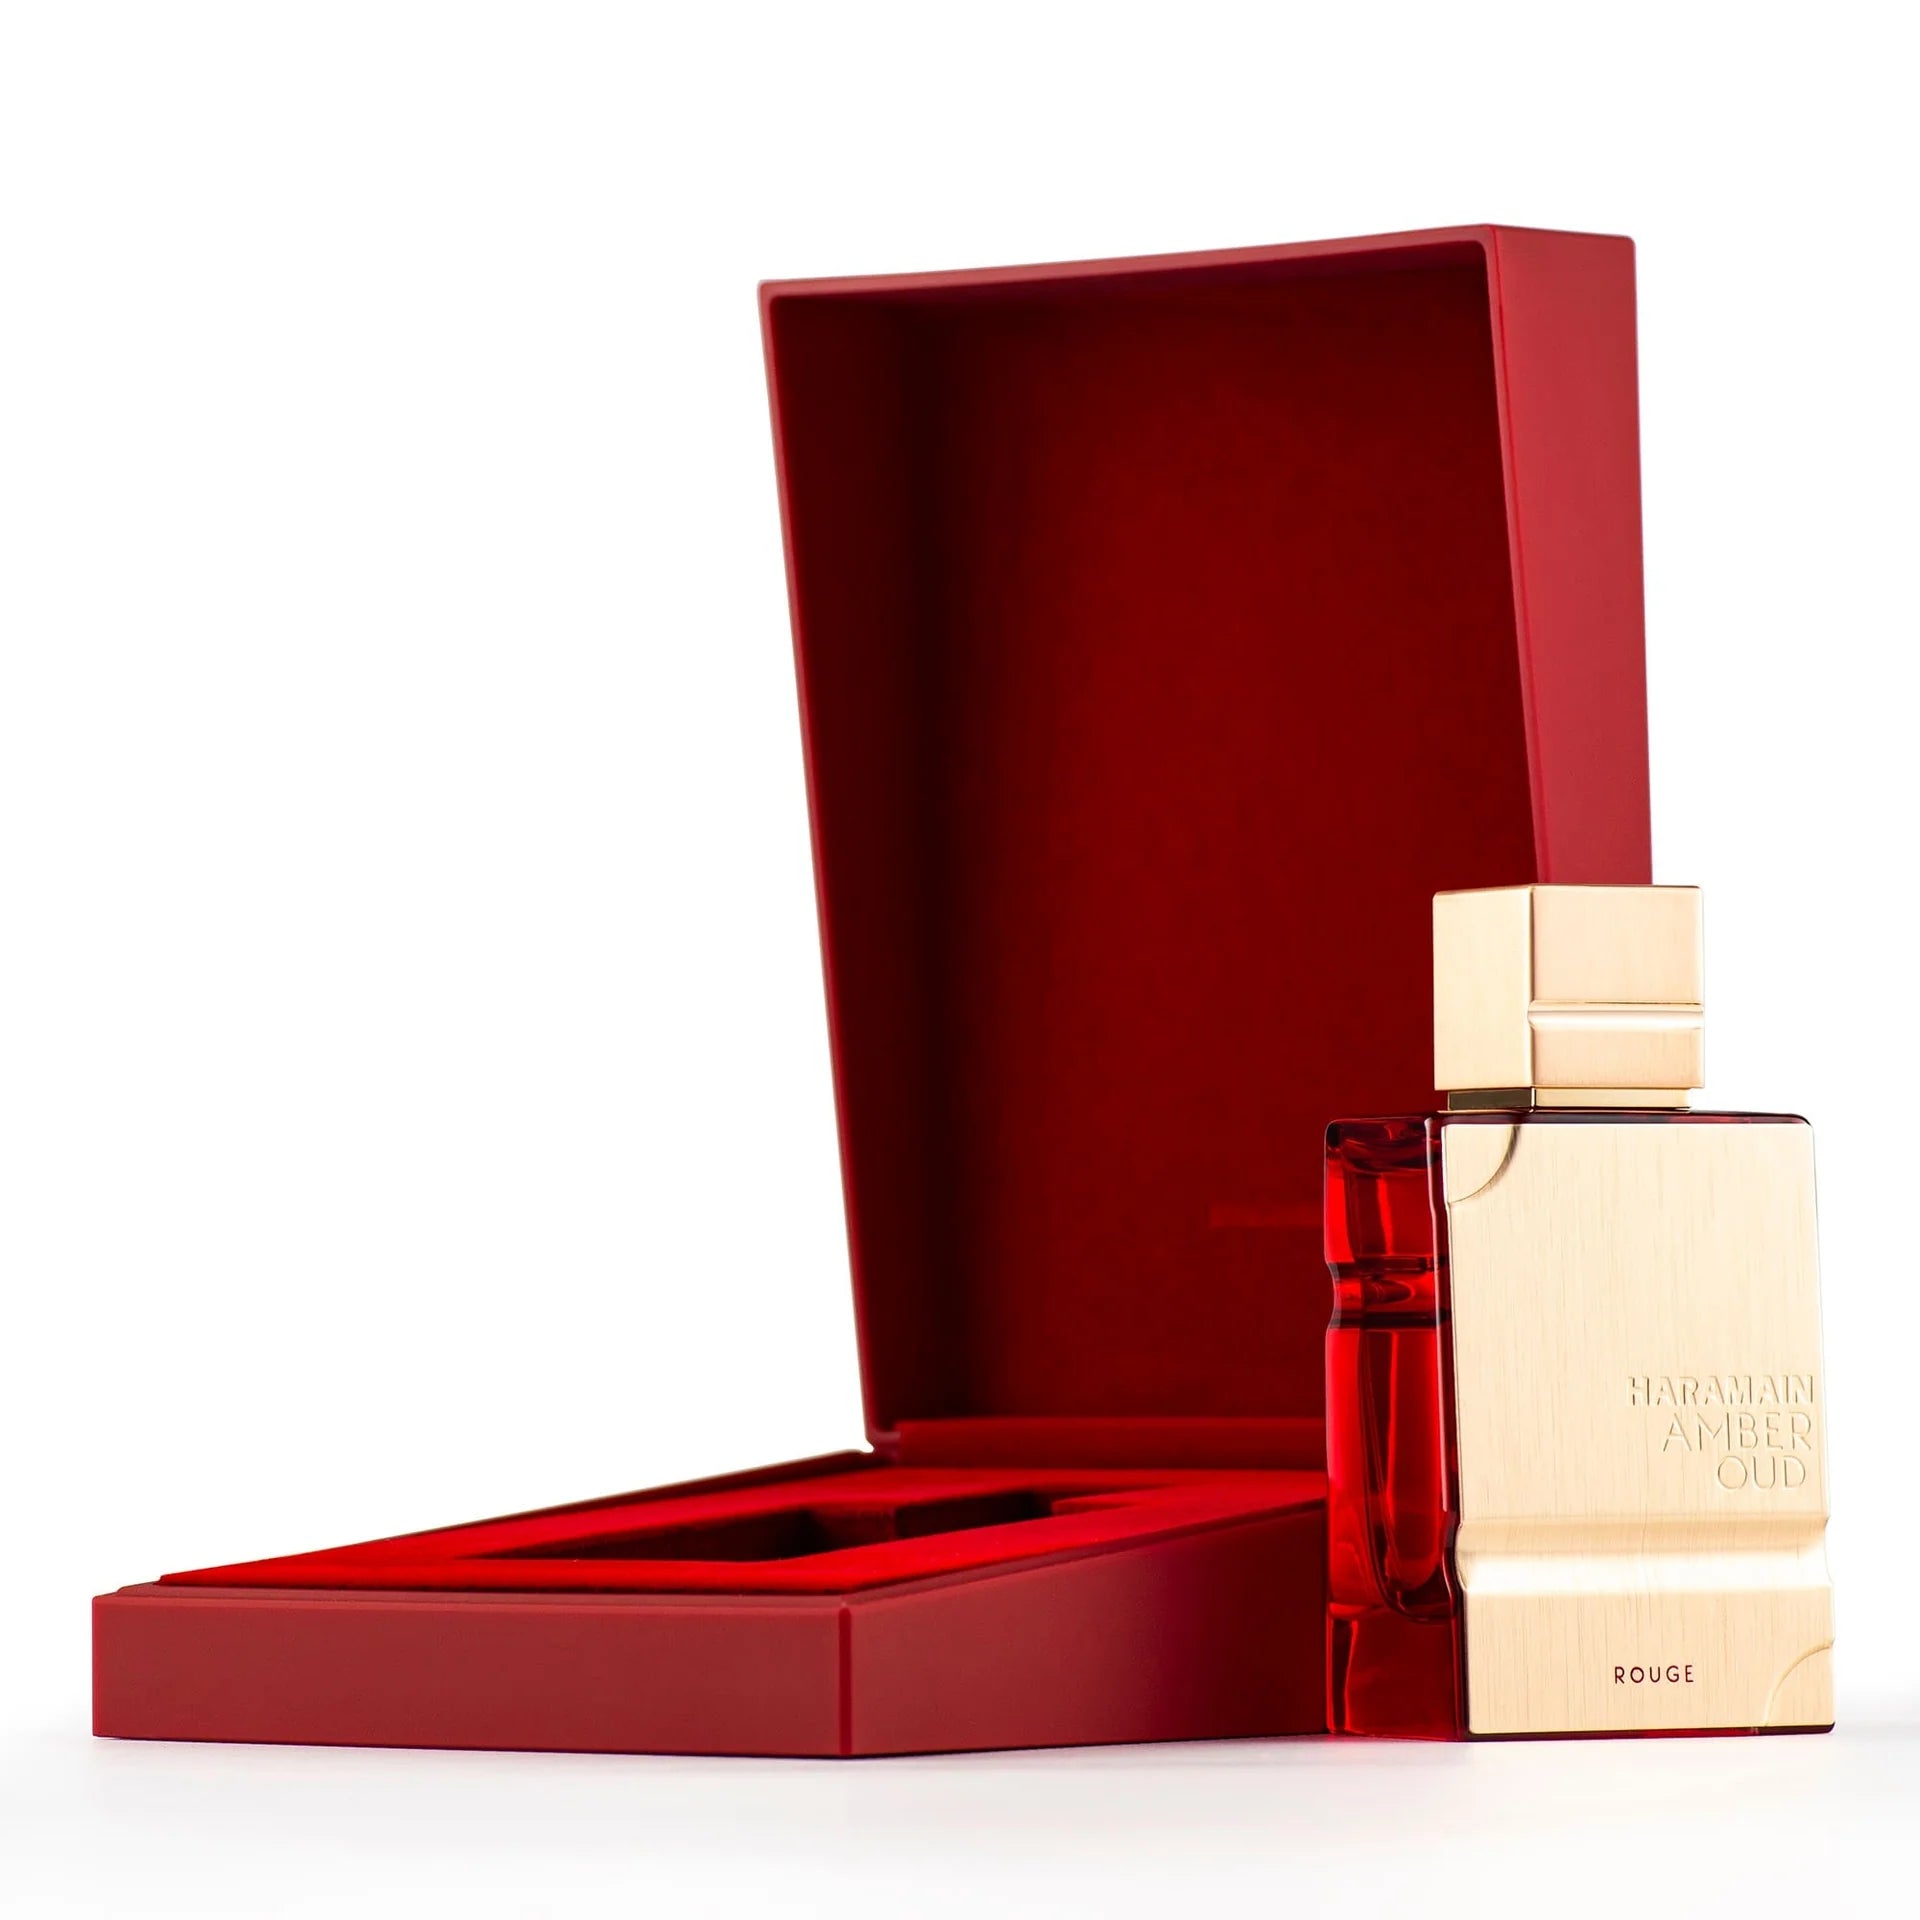 Al Haramain Amber Oud Rouge EDP | My Perfume Shop Australia